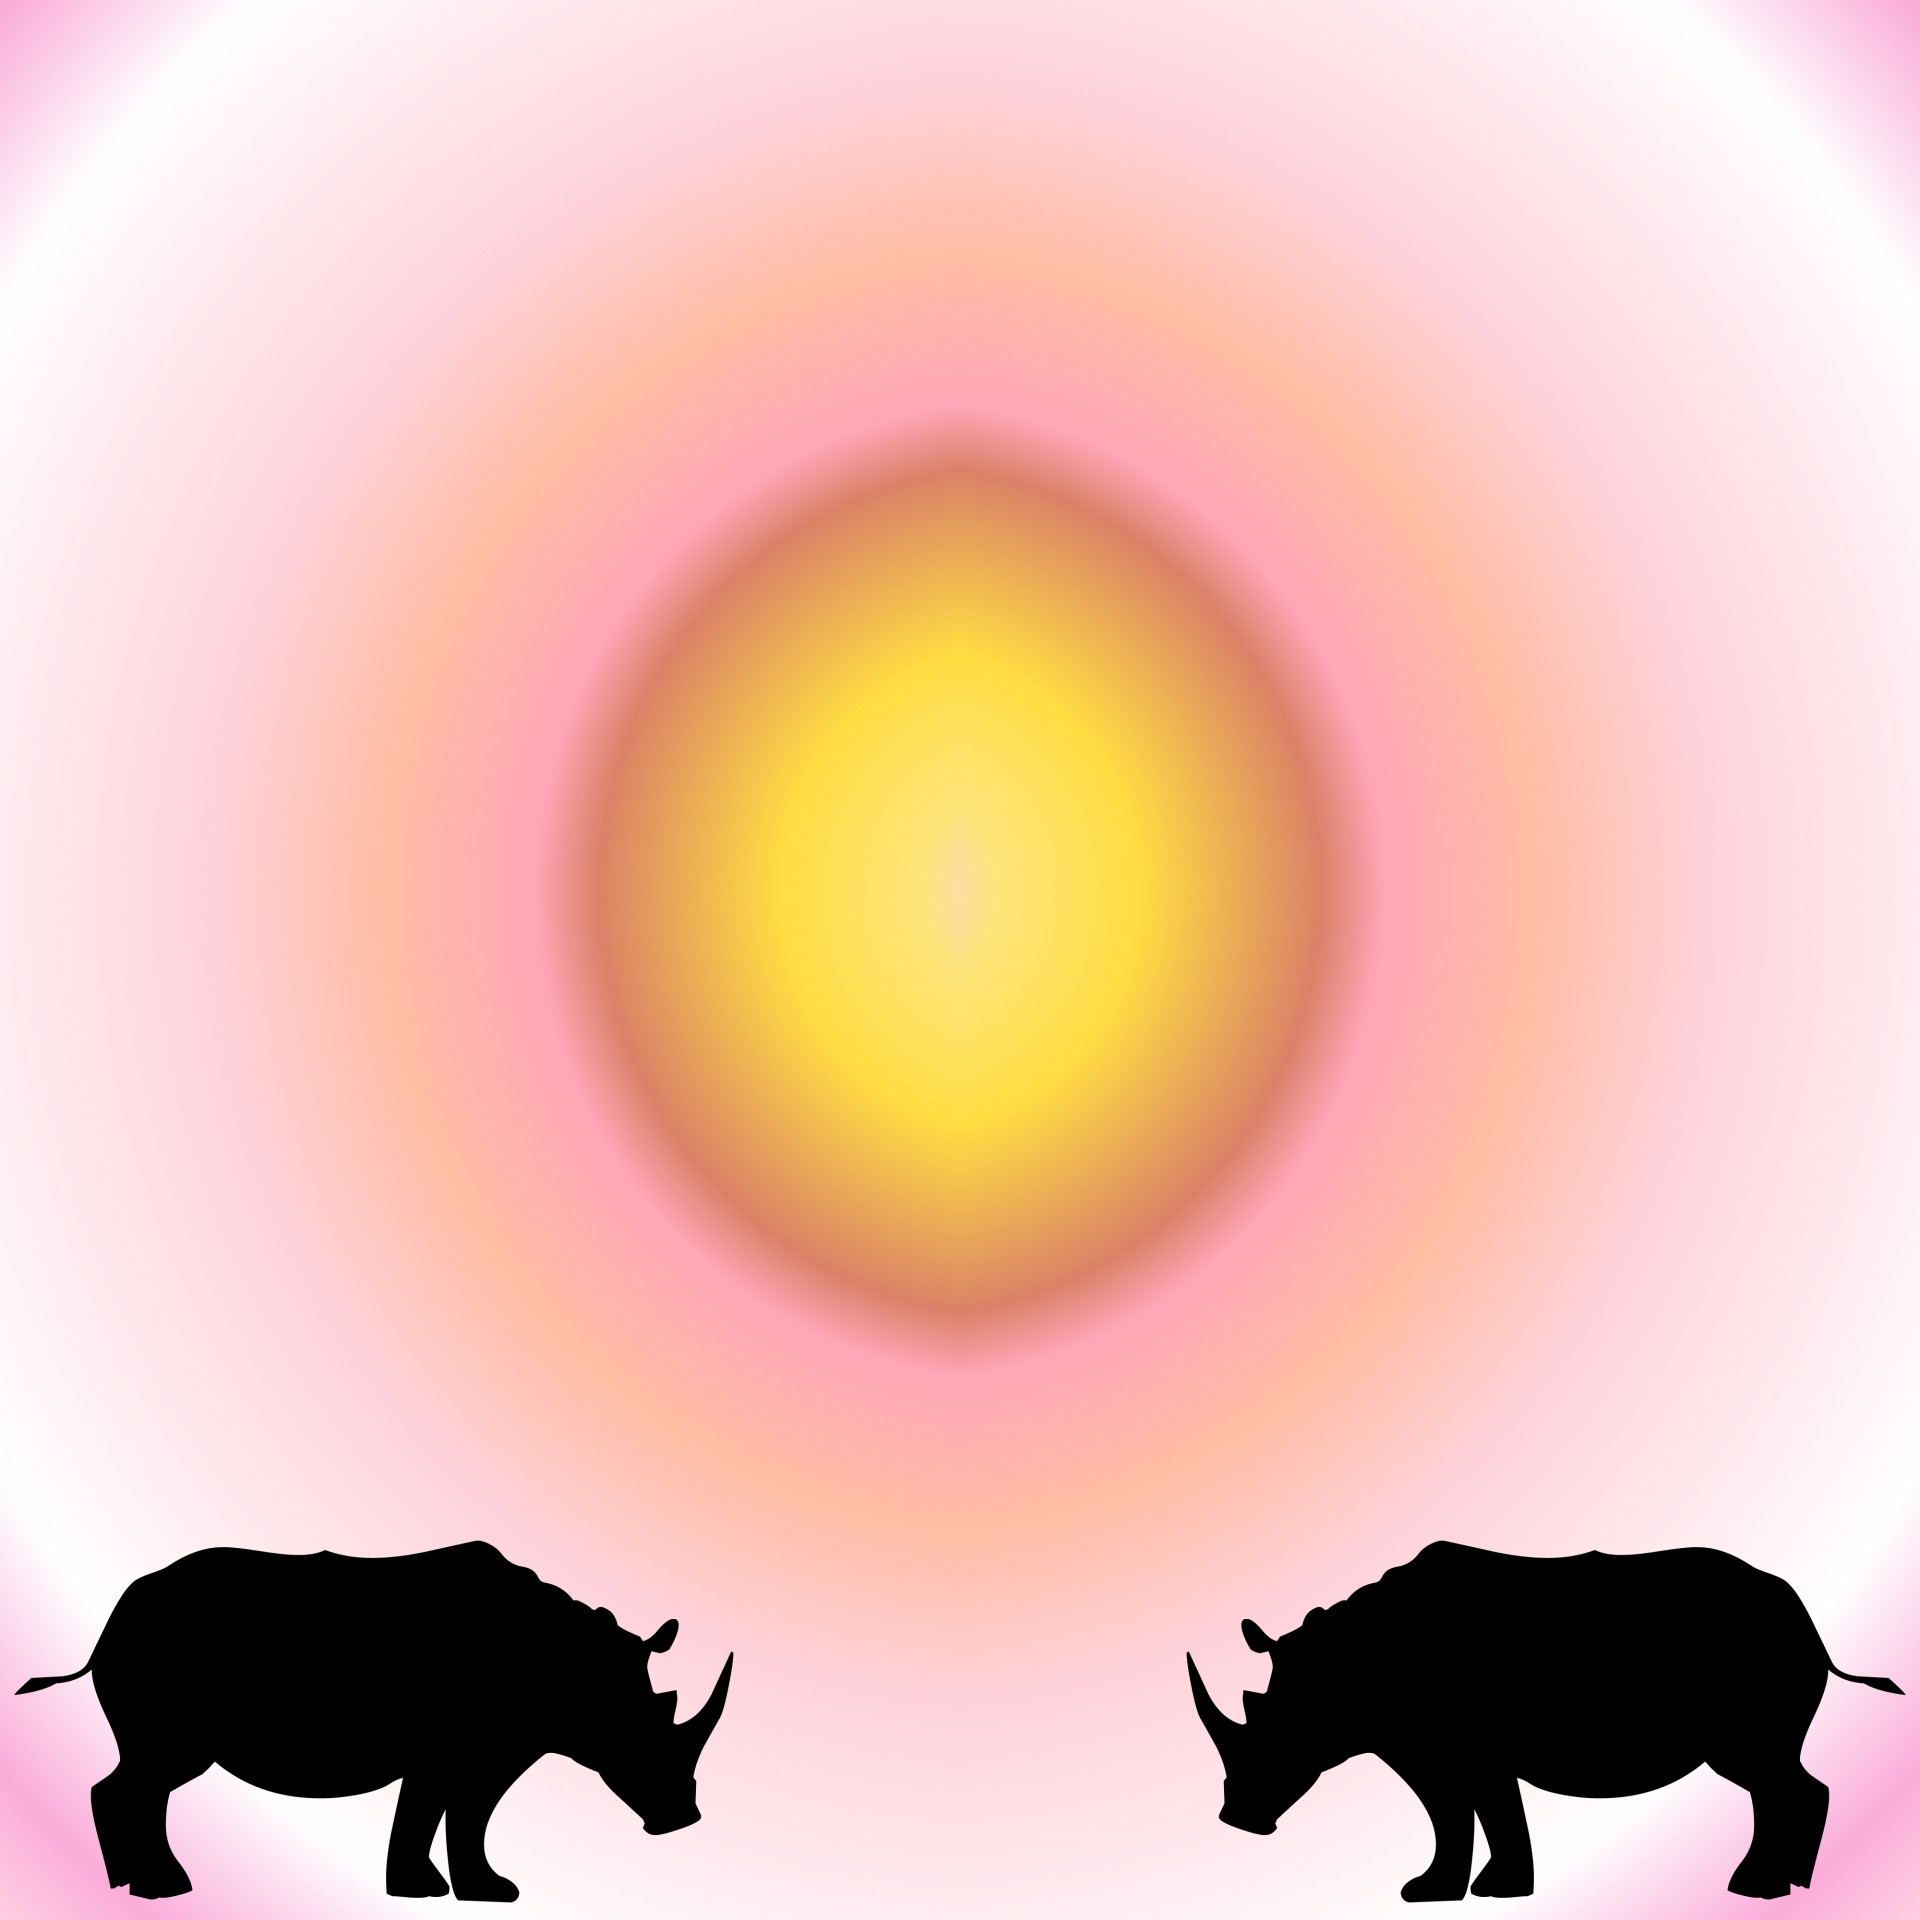 Two Rhinos